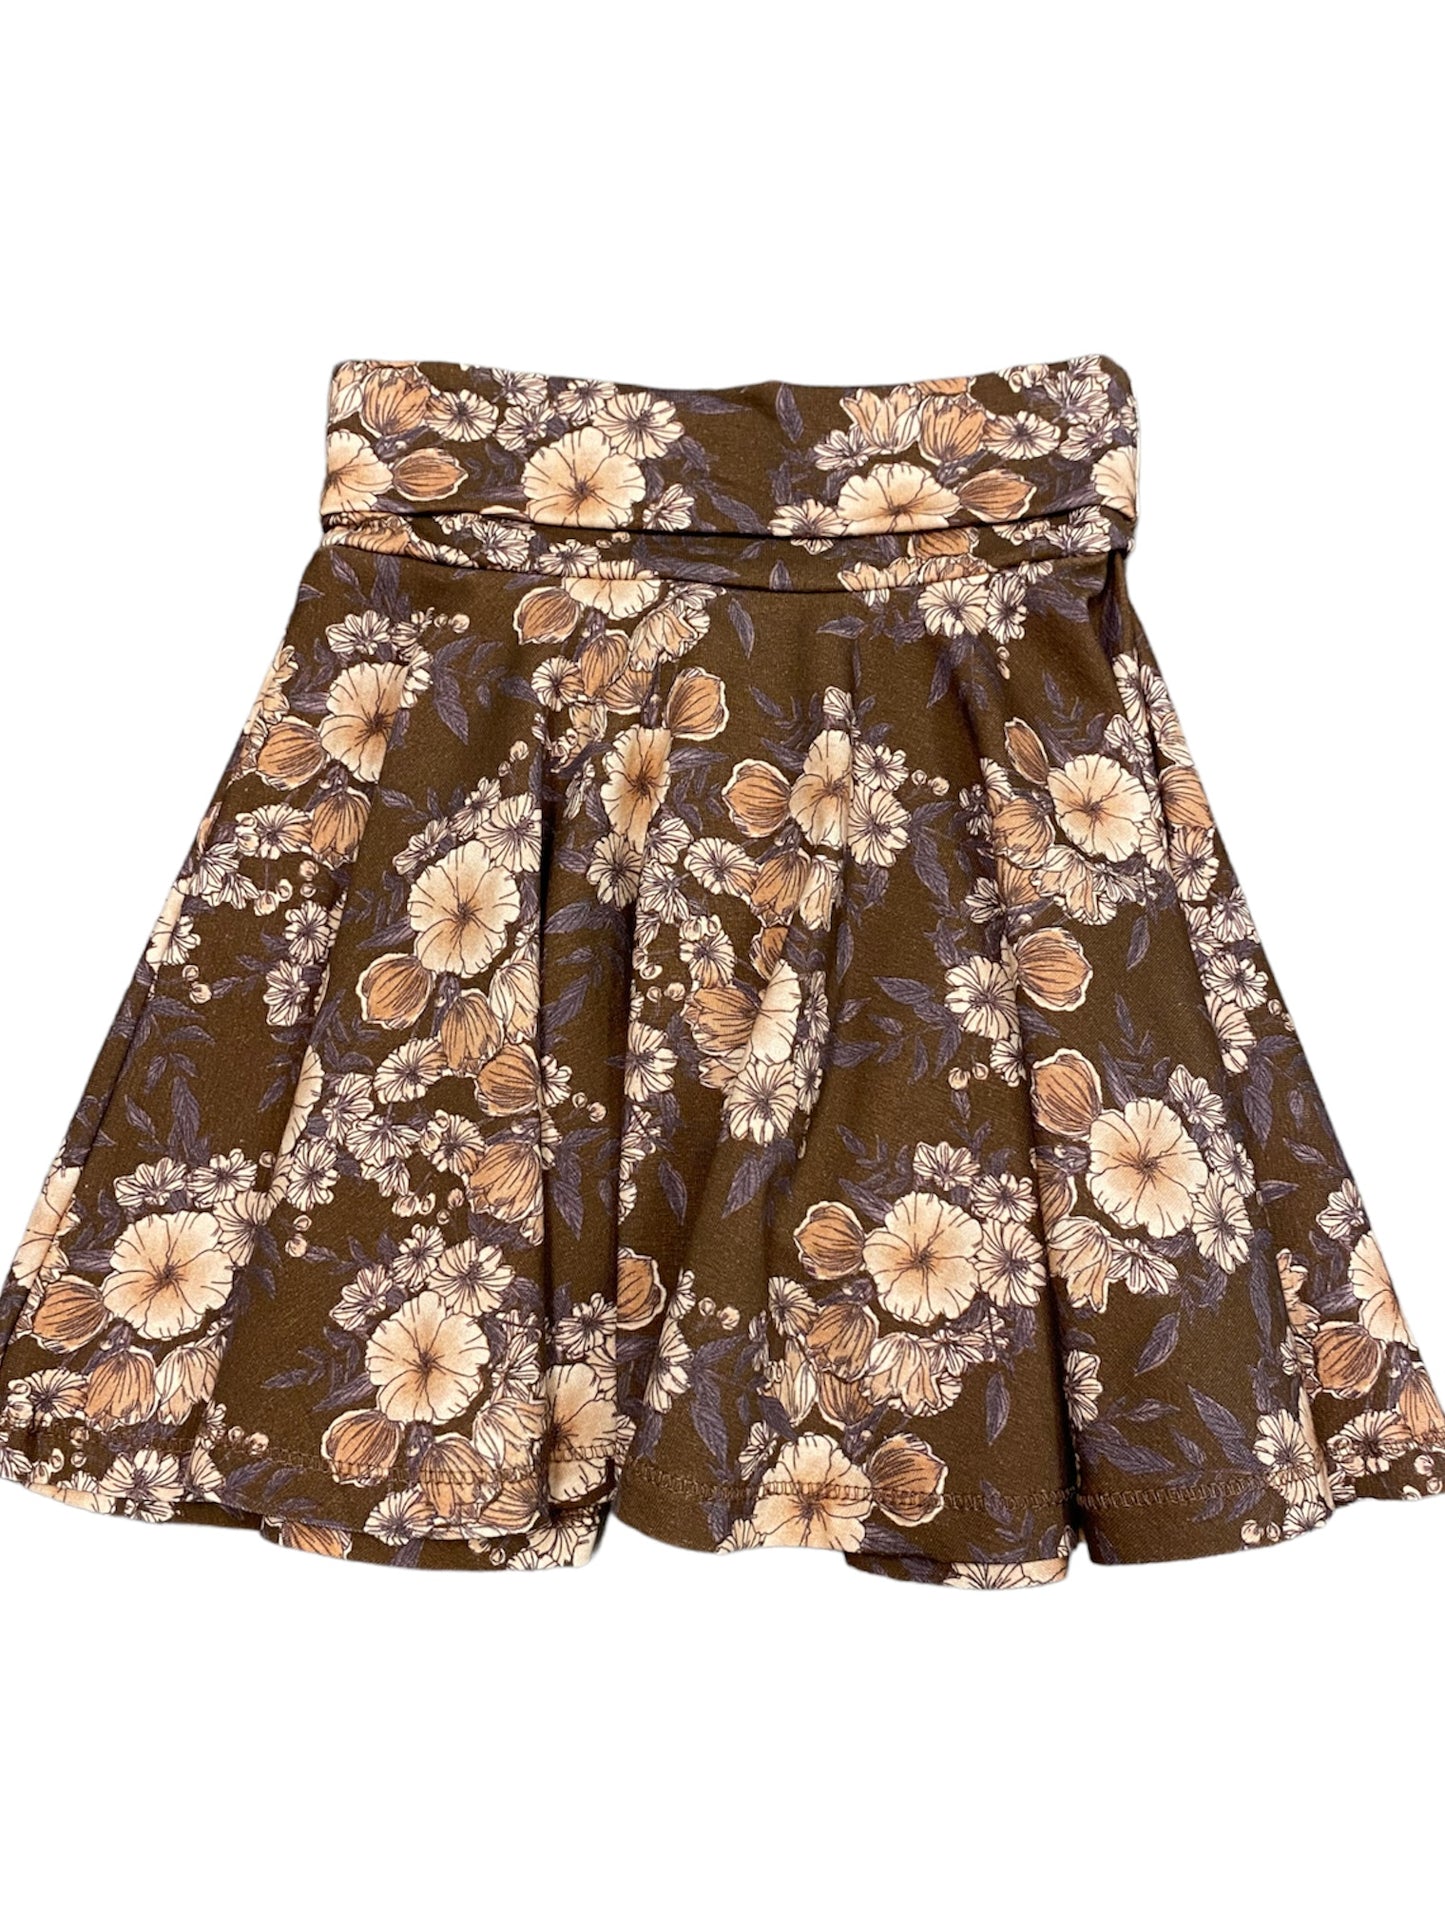 Floral print Skirt- Acorn